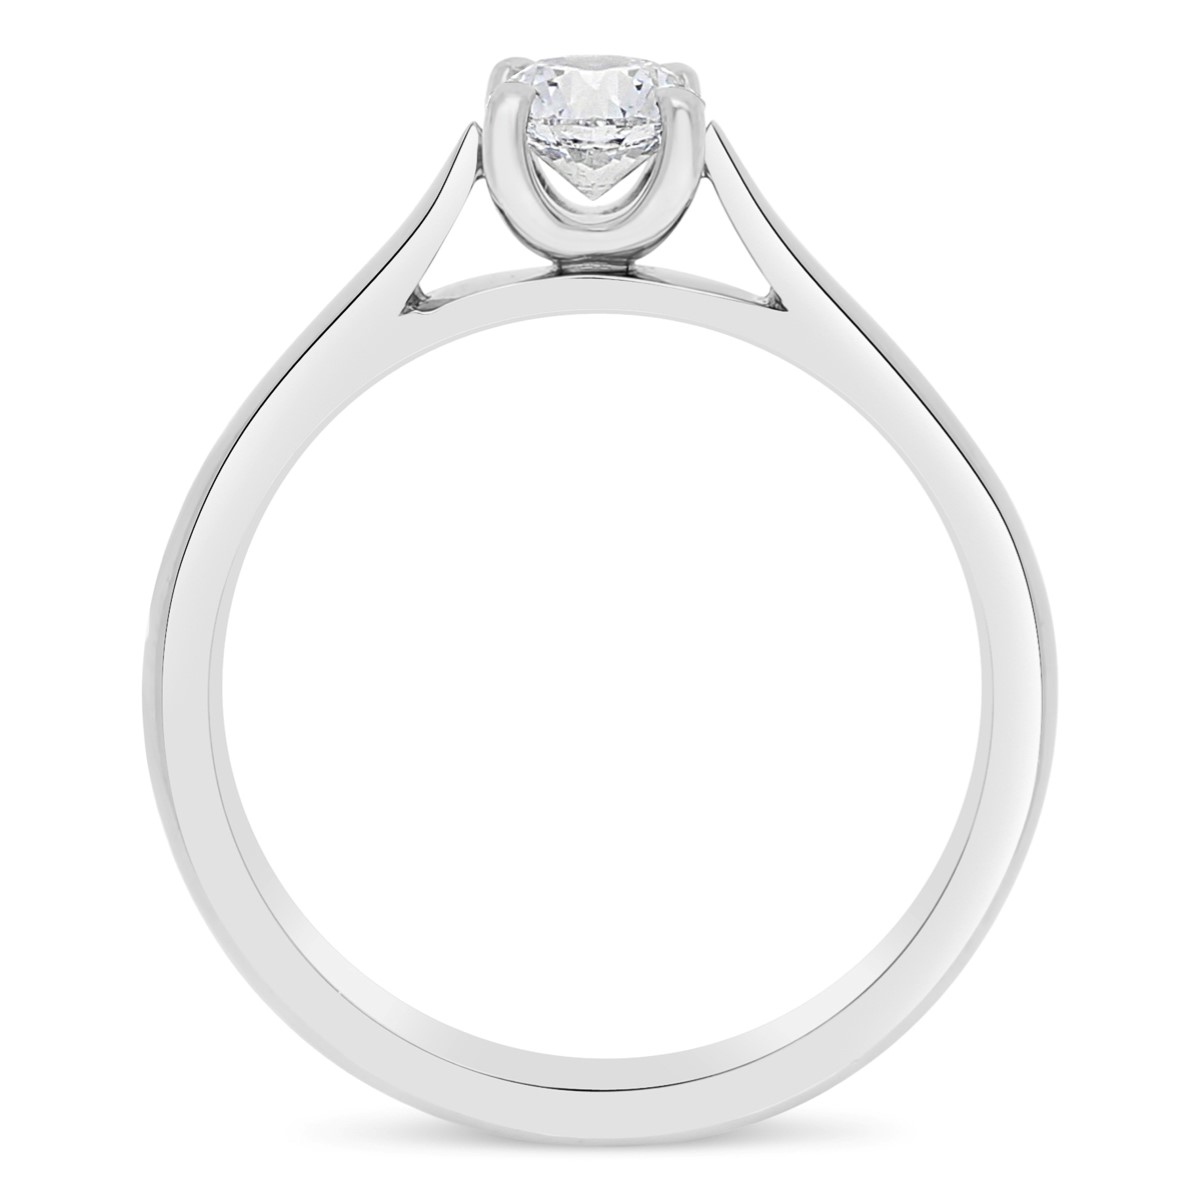 futuna-solitaires-diamants-certifies-style-classique-or-blanc-750-